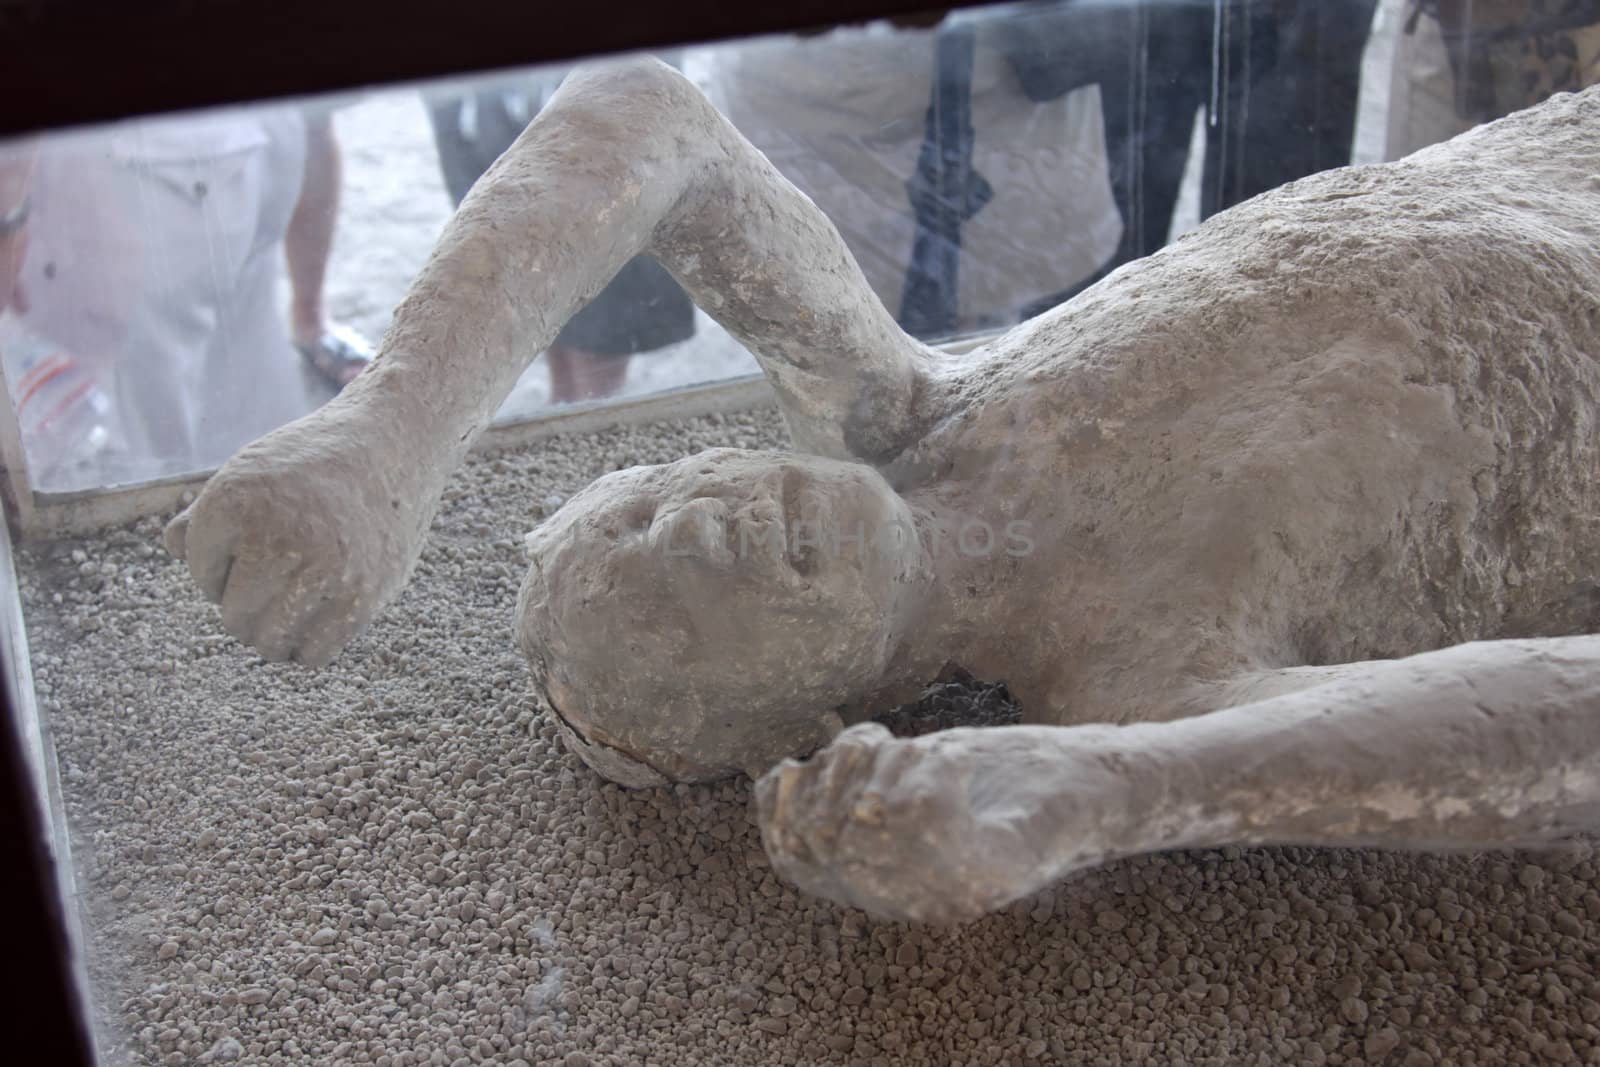 A victim of the eruption of Mount Vesuvius in AD 79, found in the Roman city of Pompeii.
